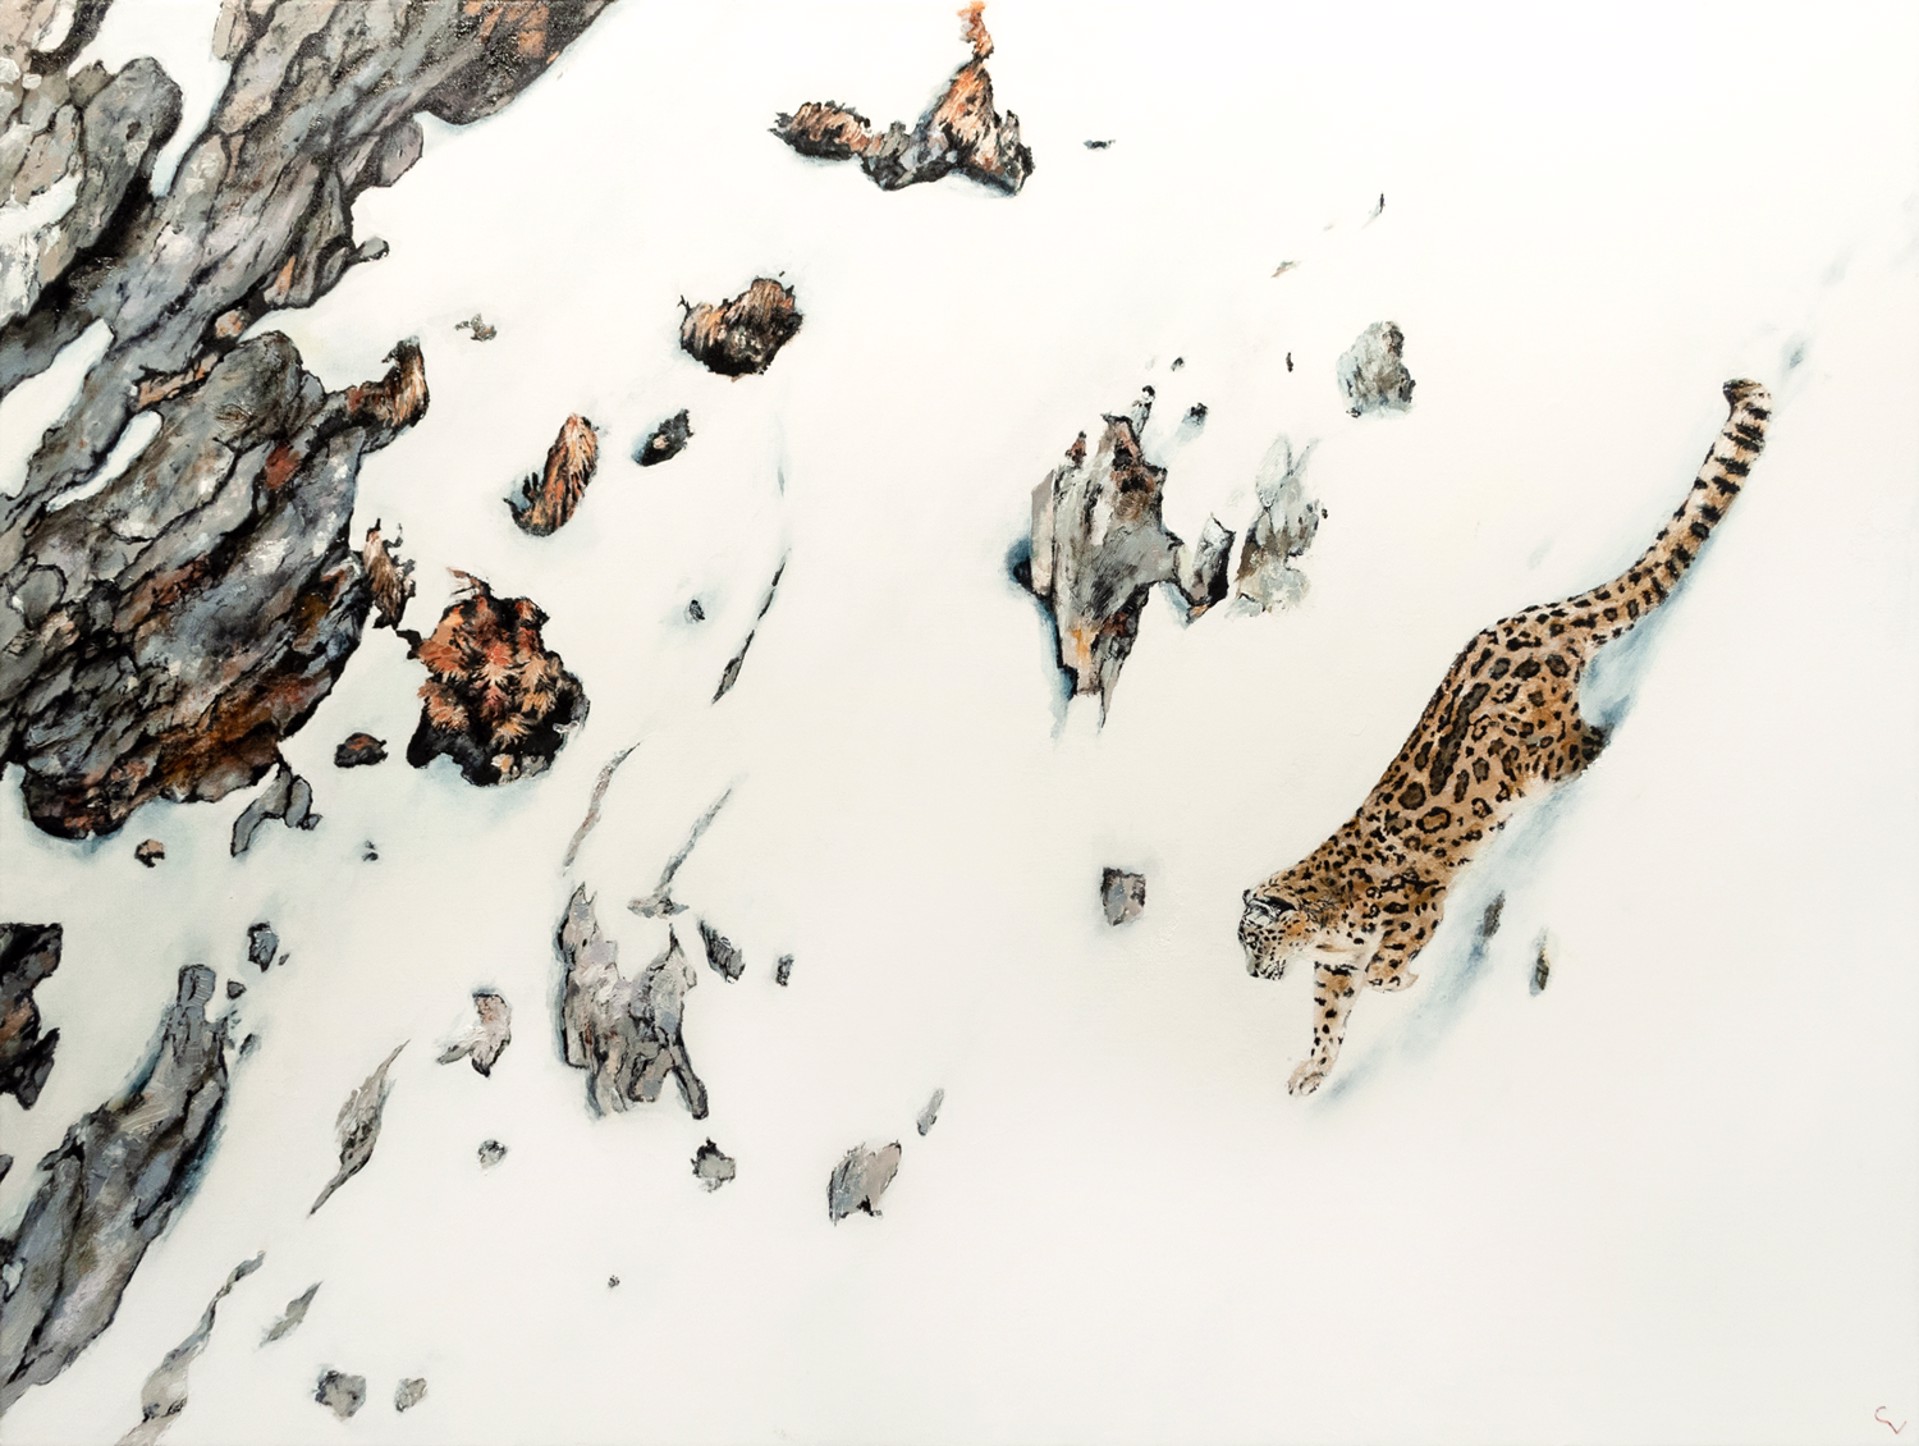 The Snow Leopard by Chris Veeneman